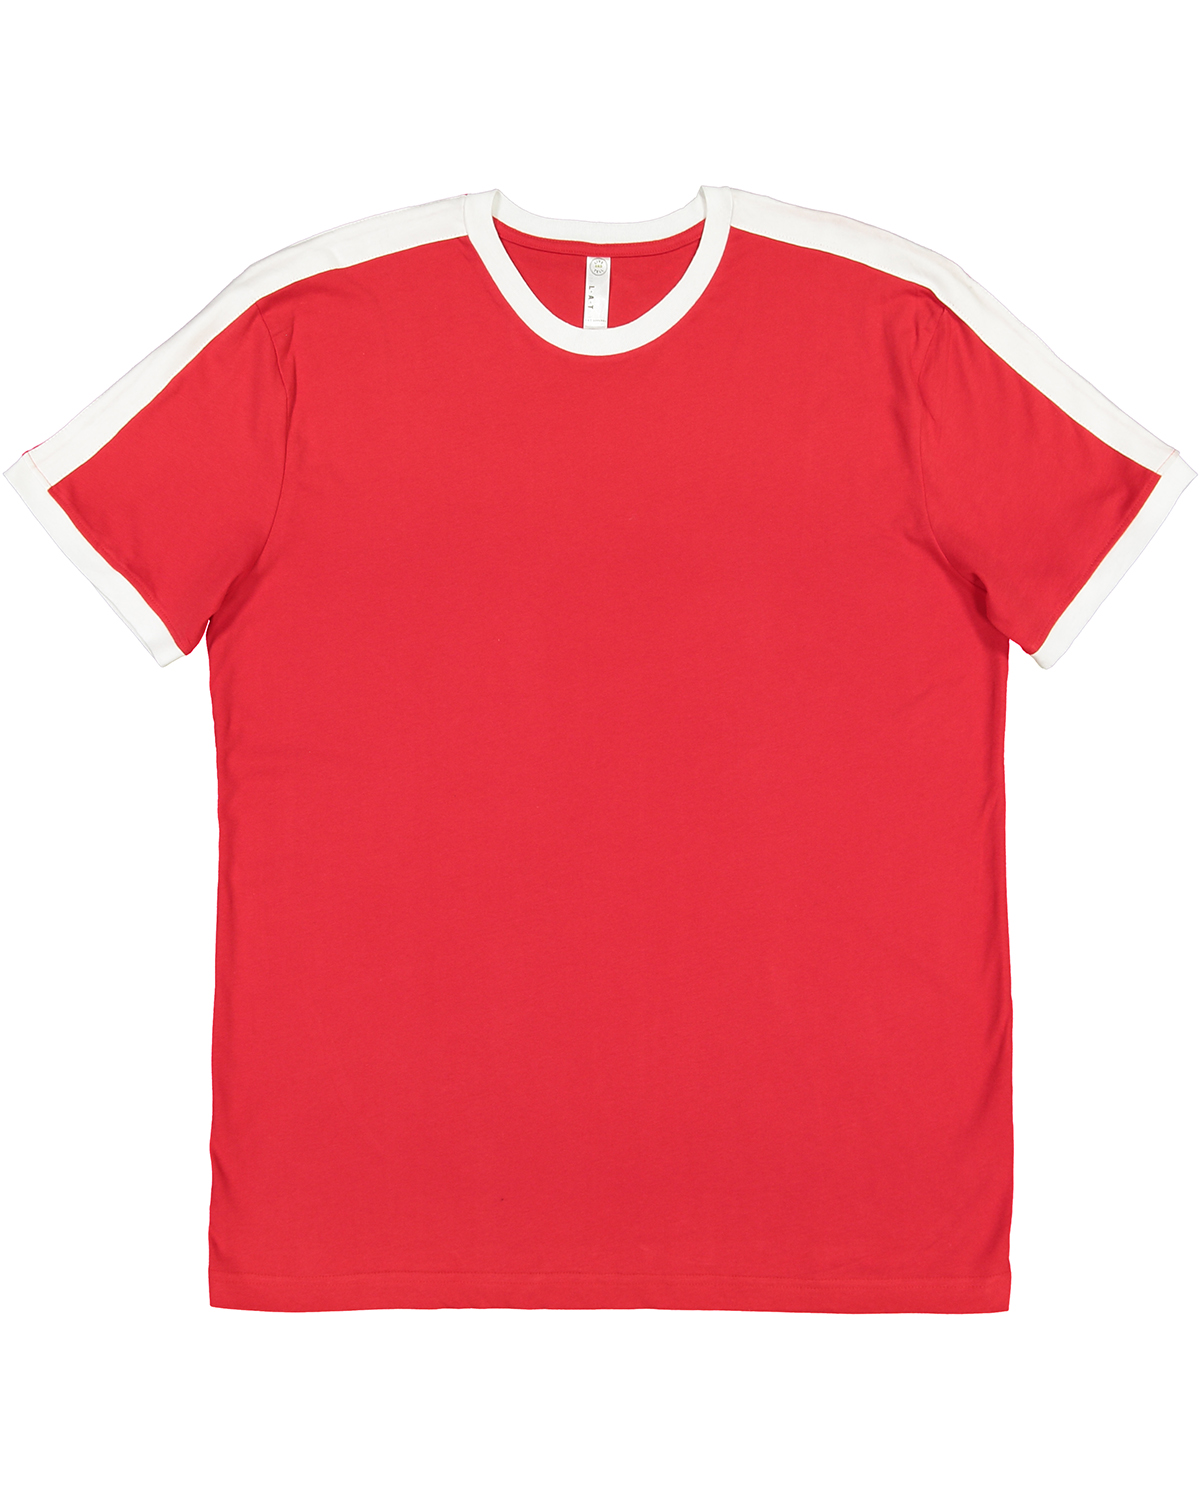 LAT 6932 Men's Soccer Ringer T-Shirt - Shirtmax